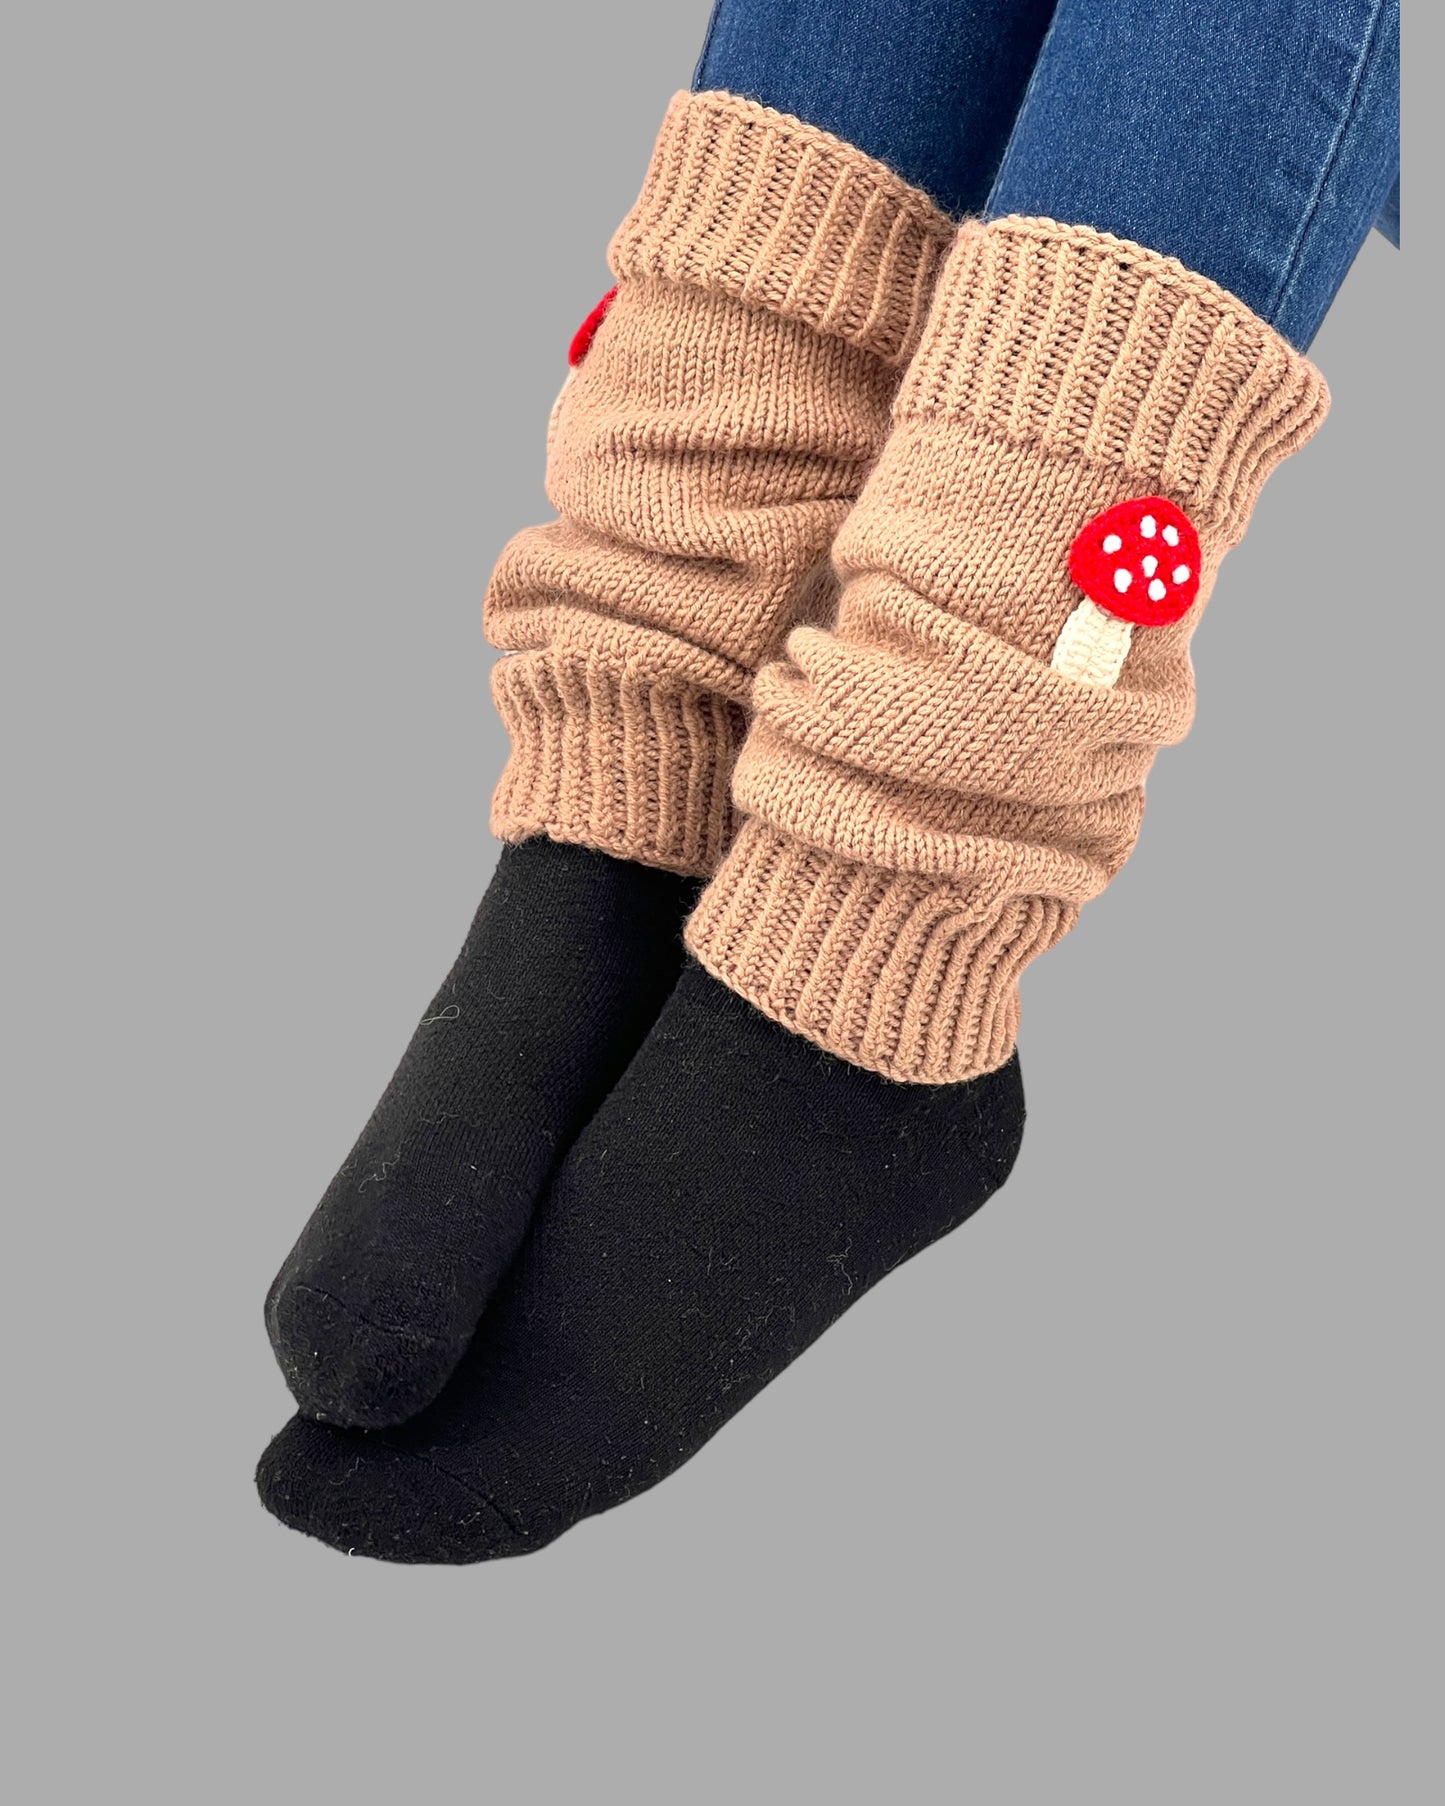 Crochet Mushroom Hand Leg Warmers - Birthday Gift for Girls: Granddaughter, Daughter, Niece. Perfect for Stocking Stuffers, Back to school